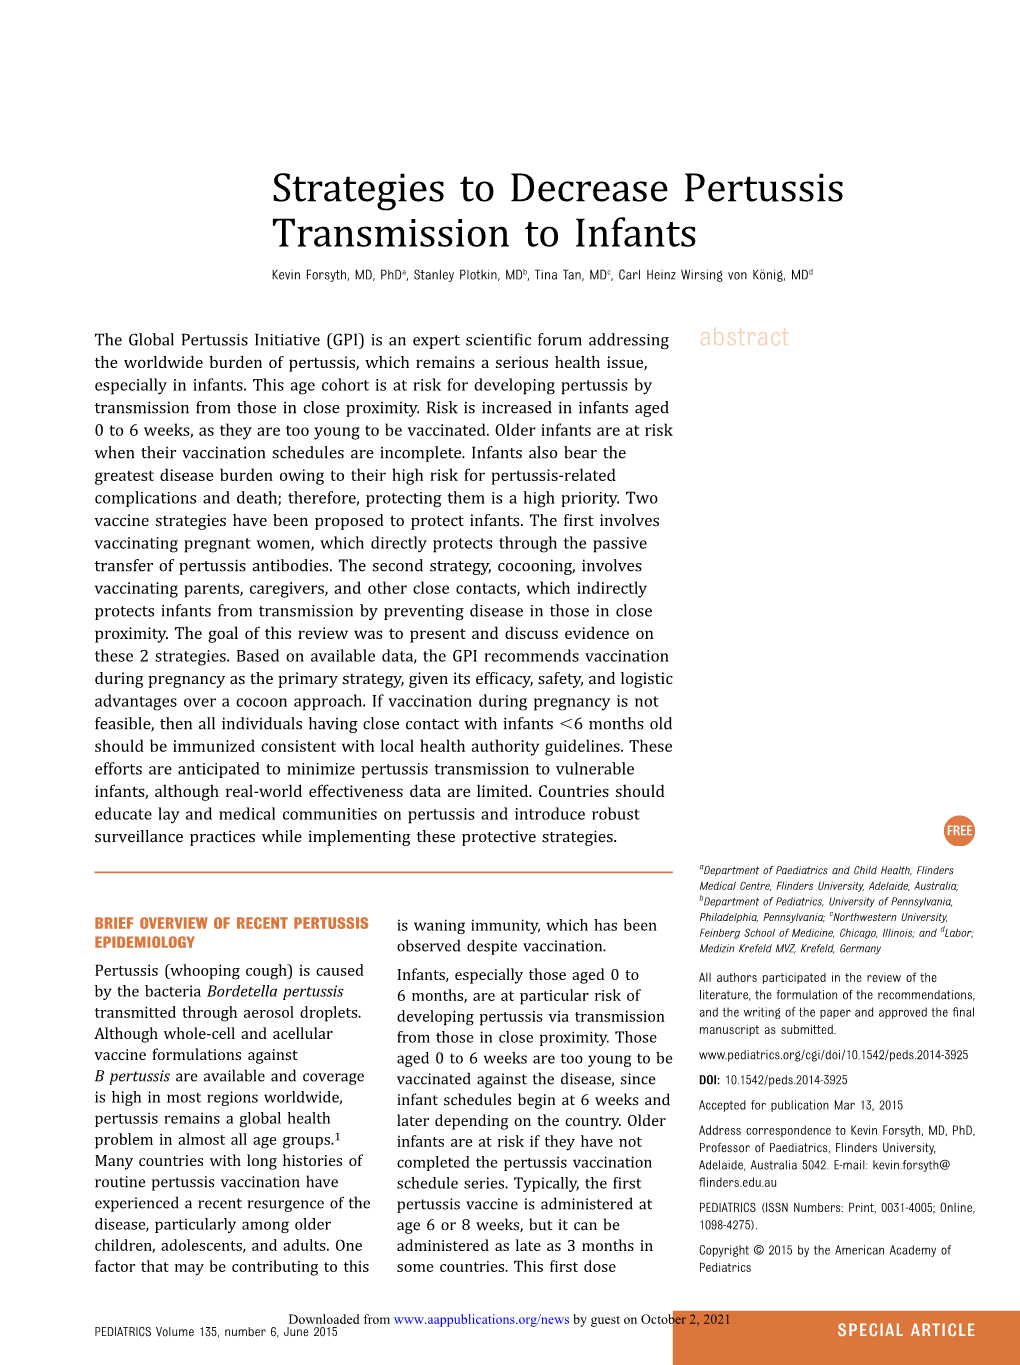 Strategies to Decrease Pertussis Transmission to Infants Kevin Forsyth, MD, Phda, Stanley Plotkin, Mdb, Tina Tan, Mdc, Carl Heinz Wirsing Von König, Mdd